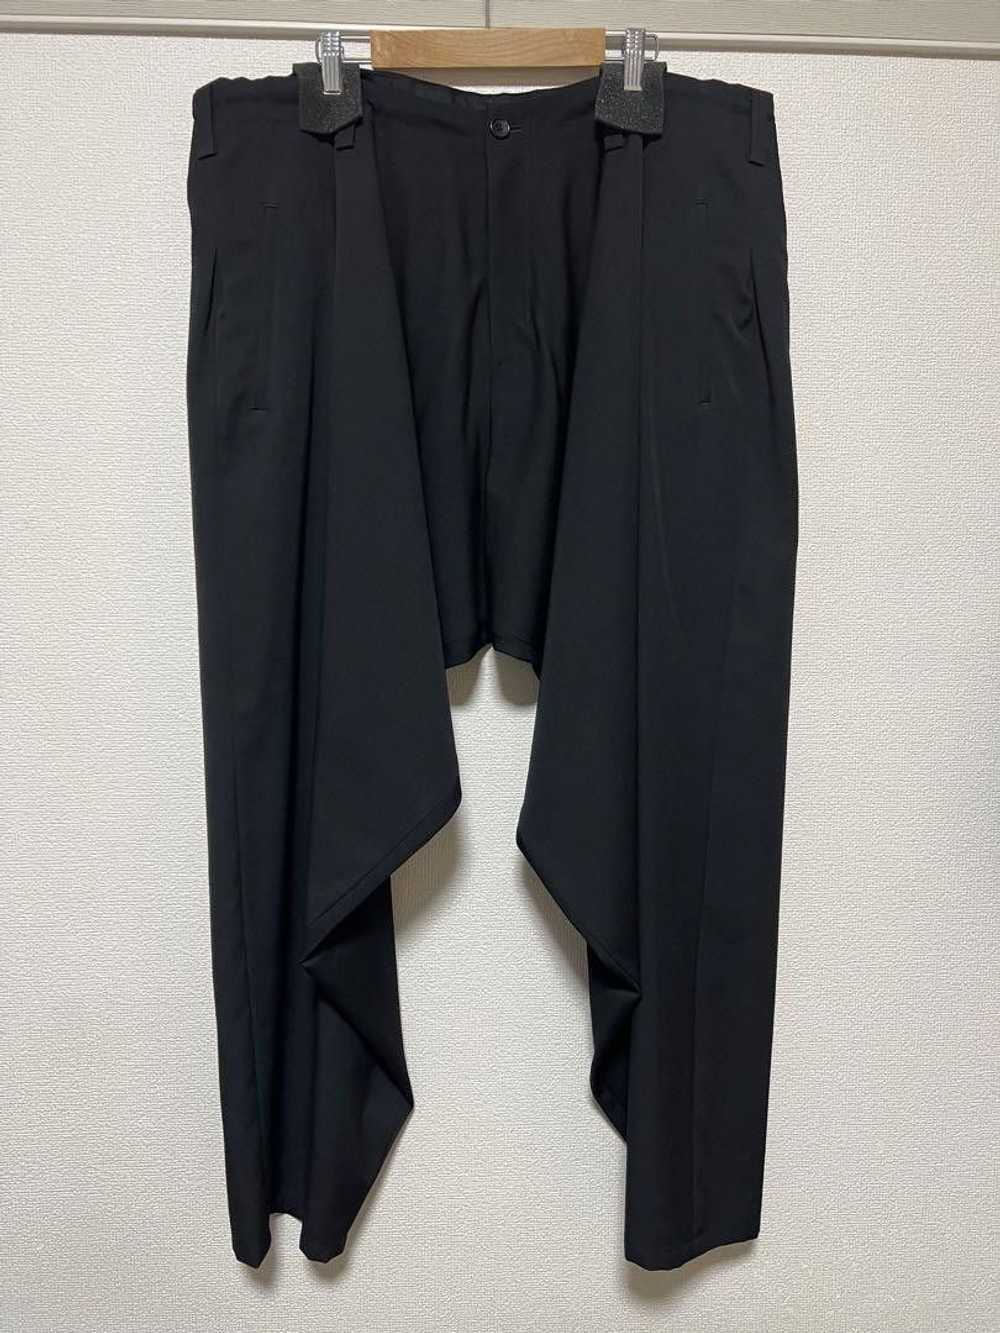 Yohji Yamamoto POUR HOMME 23aw draped pants - image 2